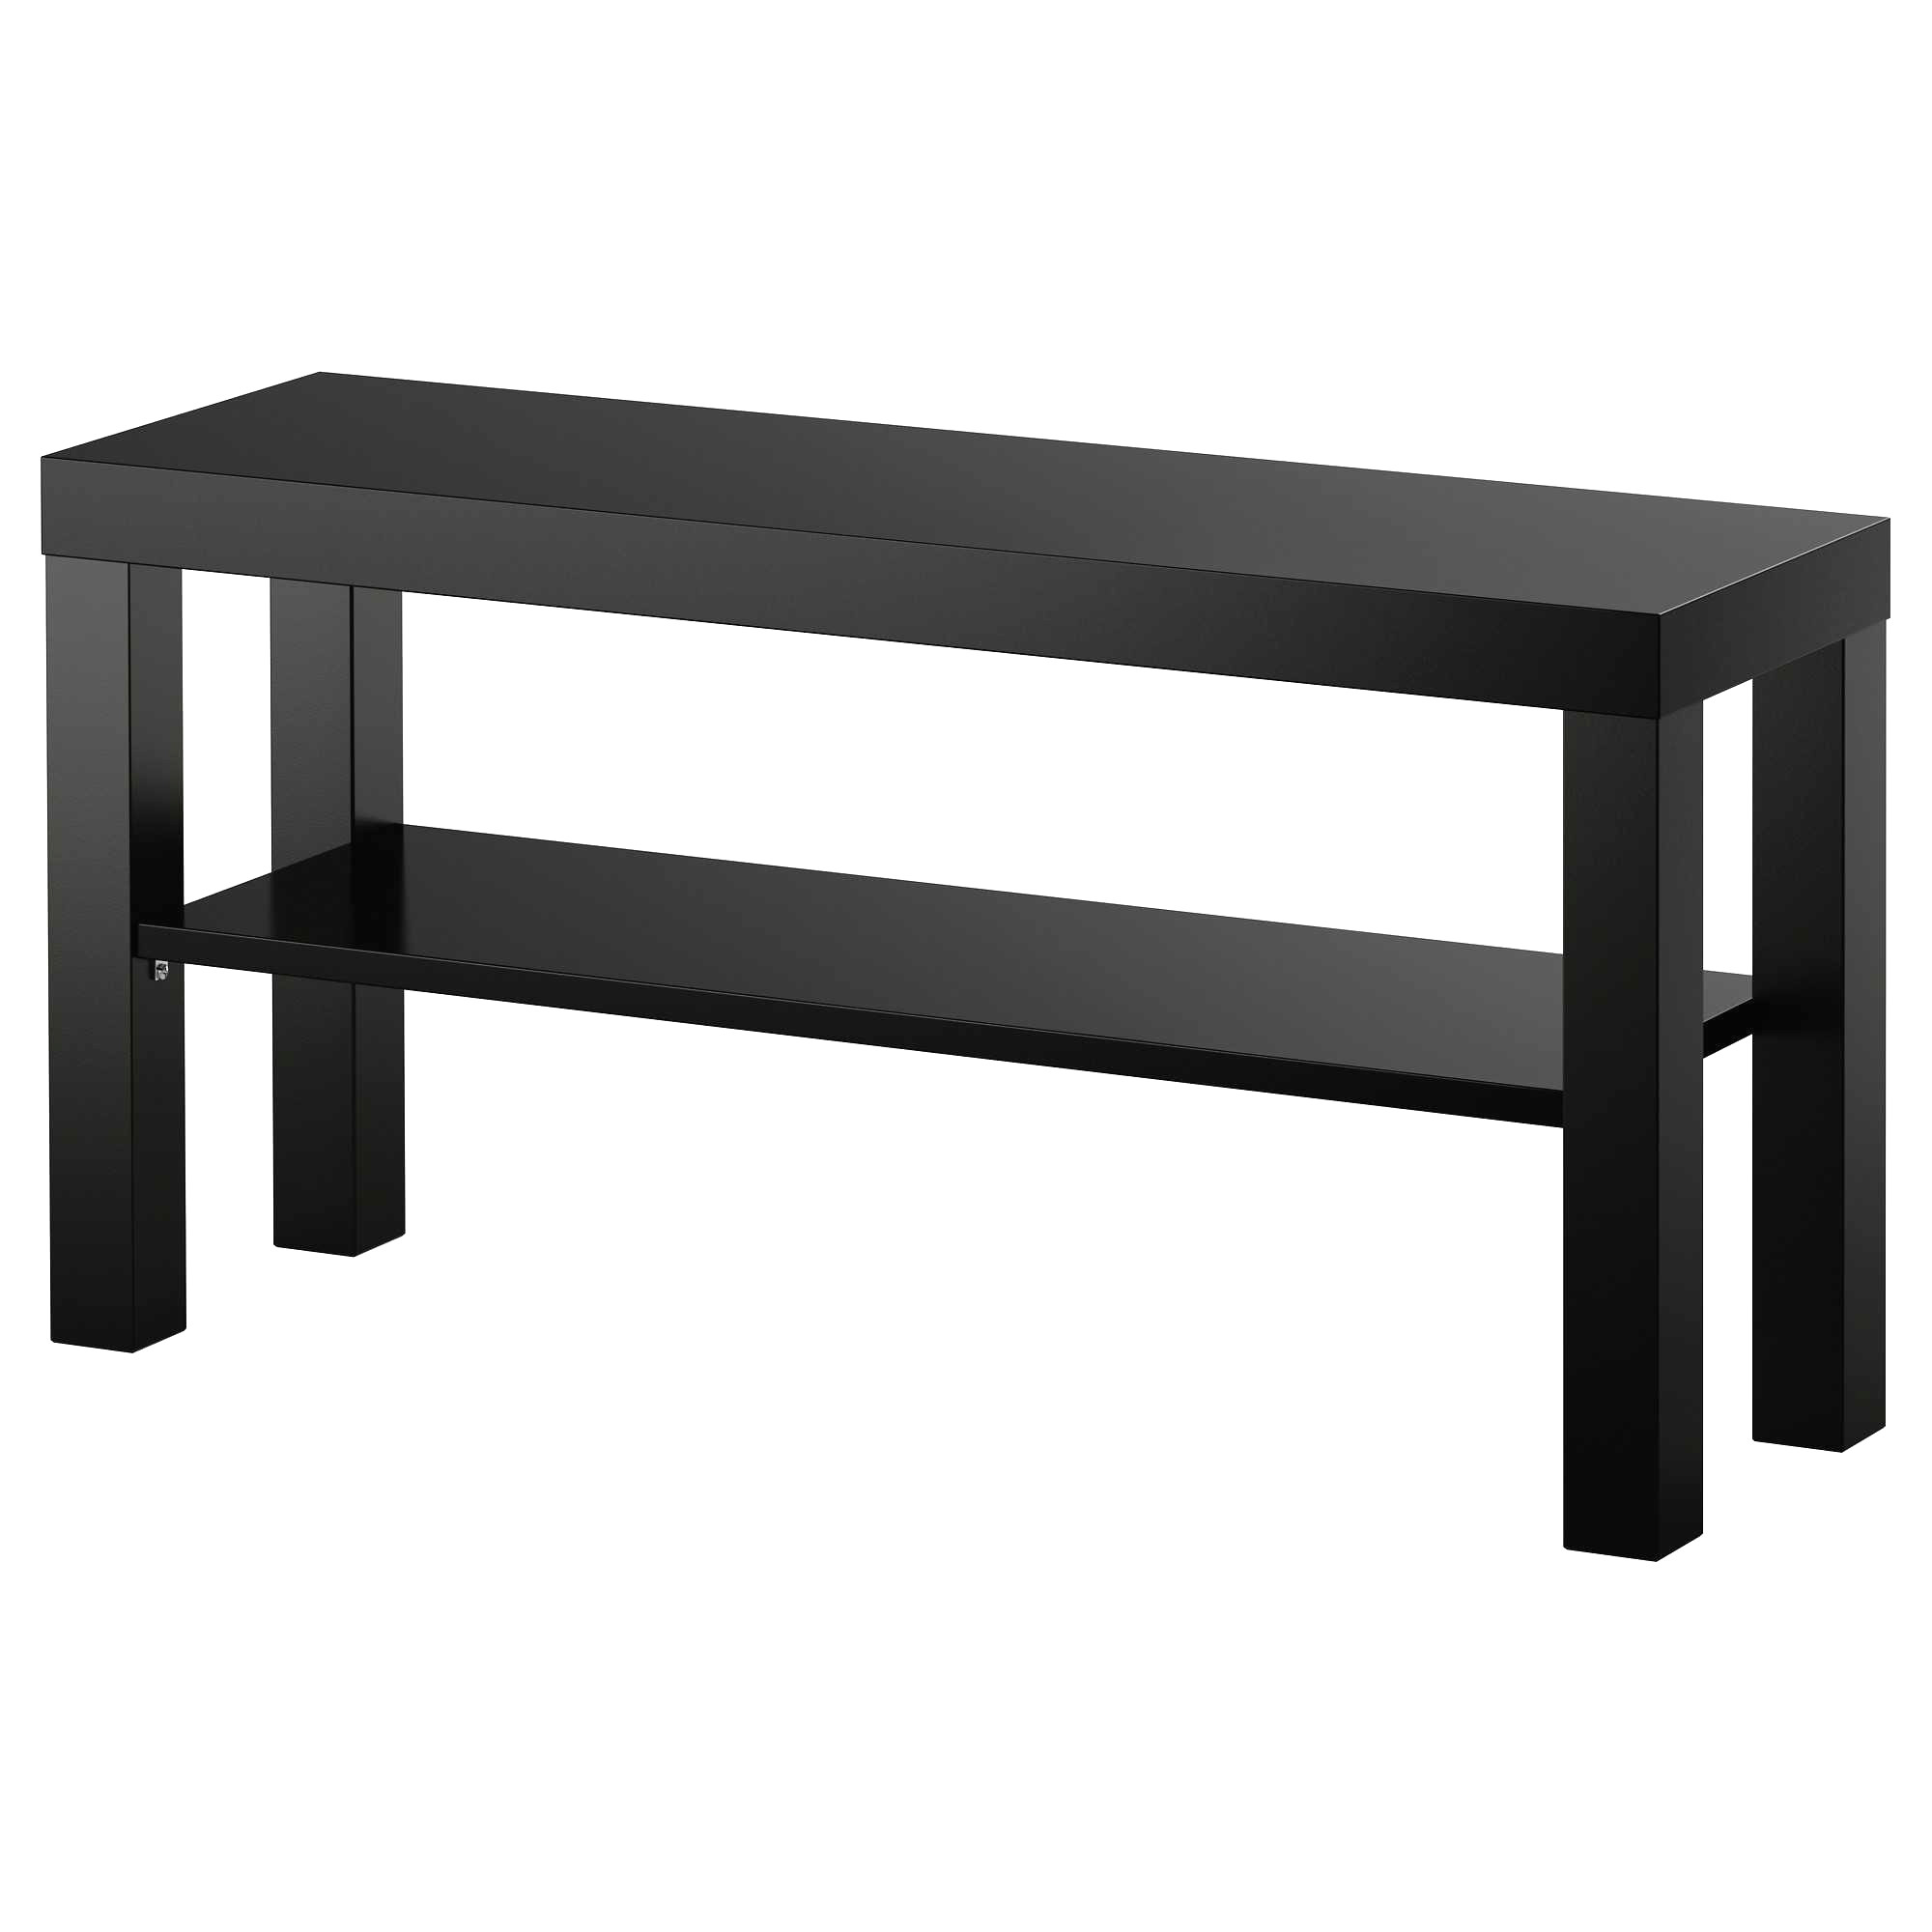 Table Alinea Extensible Unique Table Console Extensible Ikea